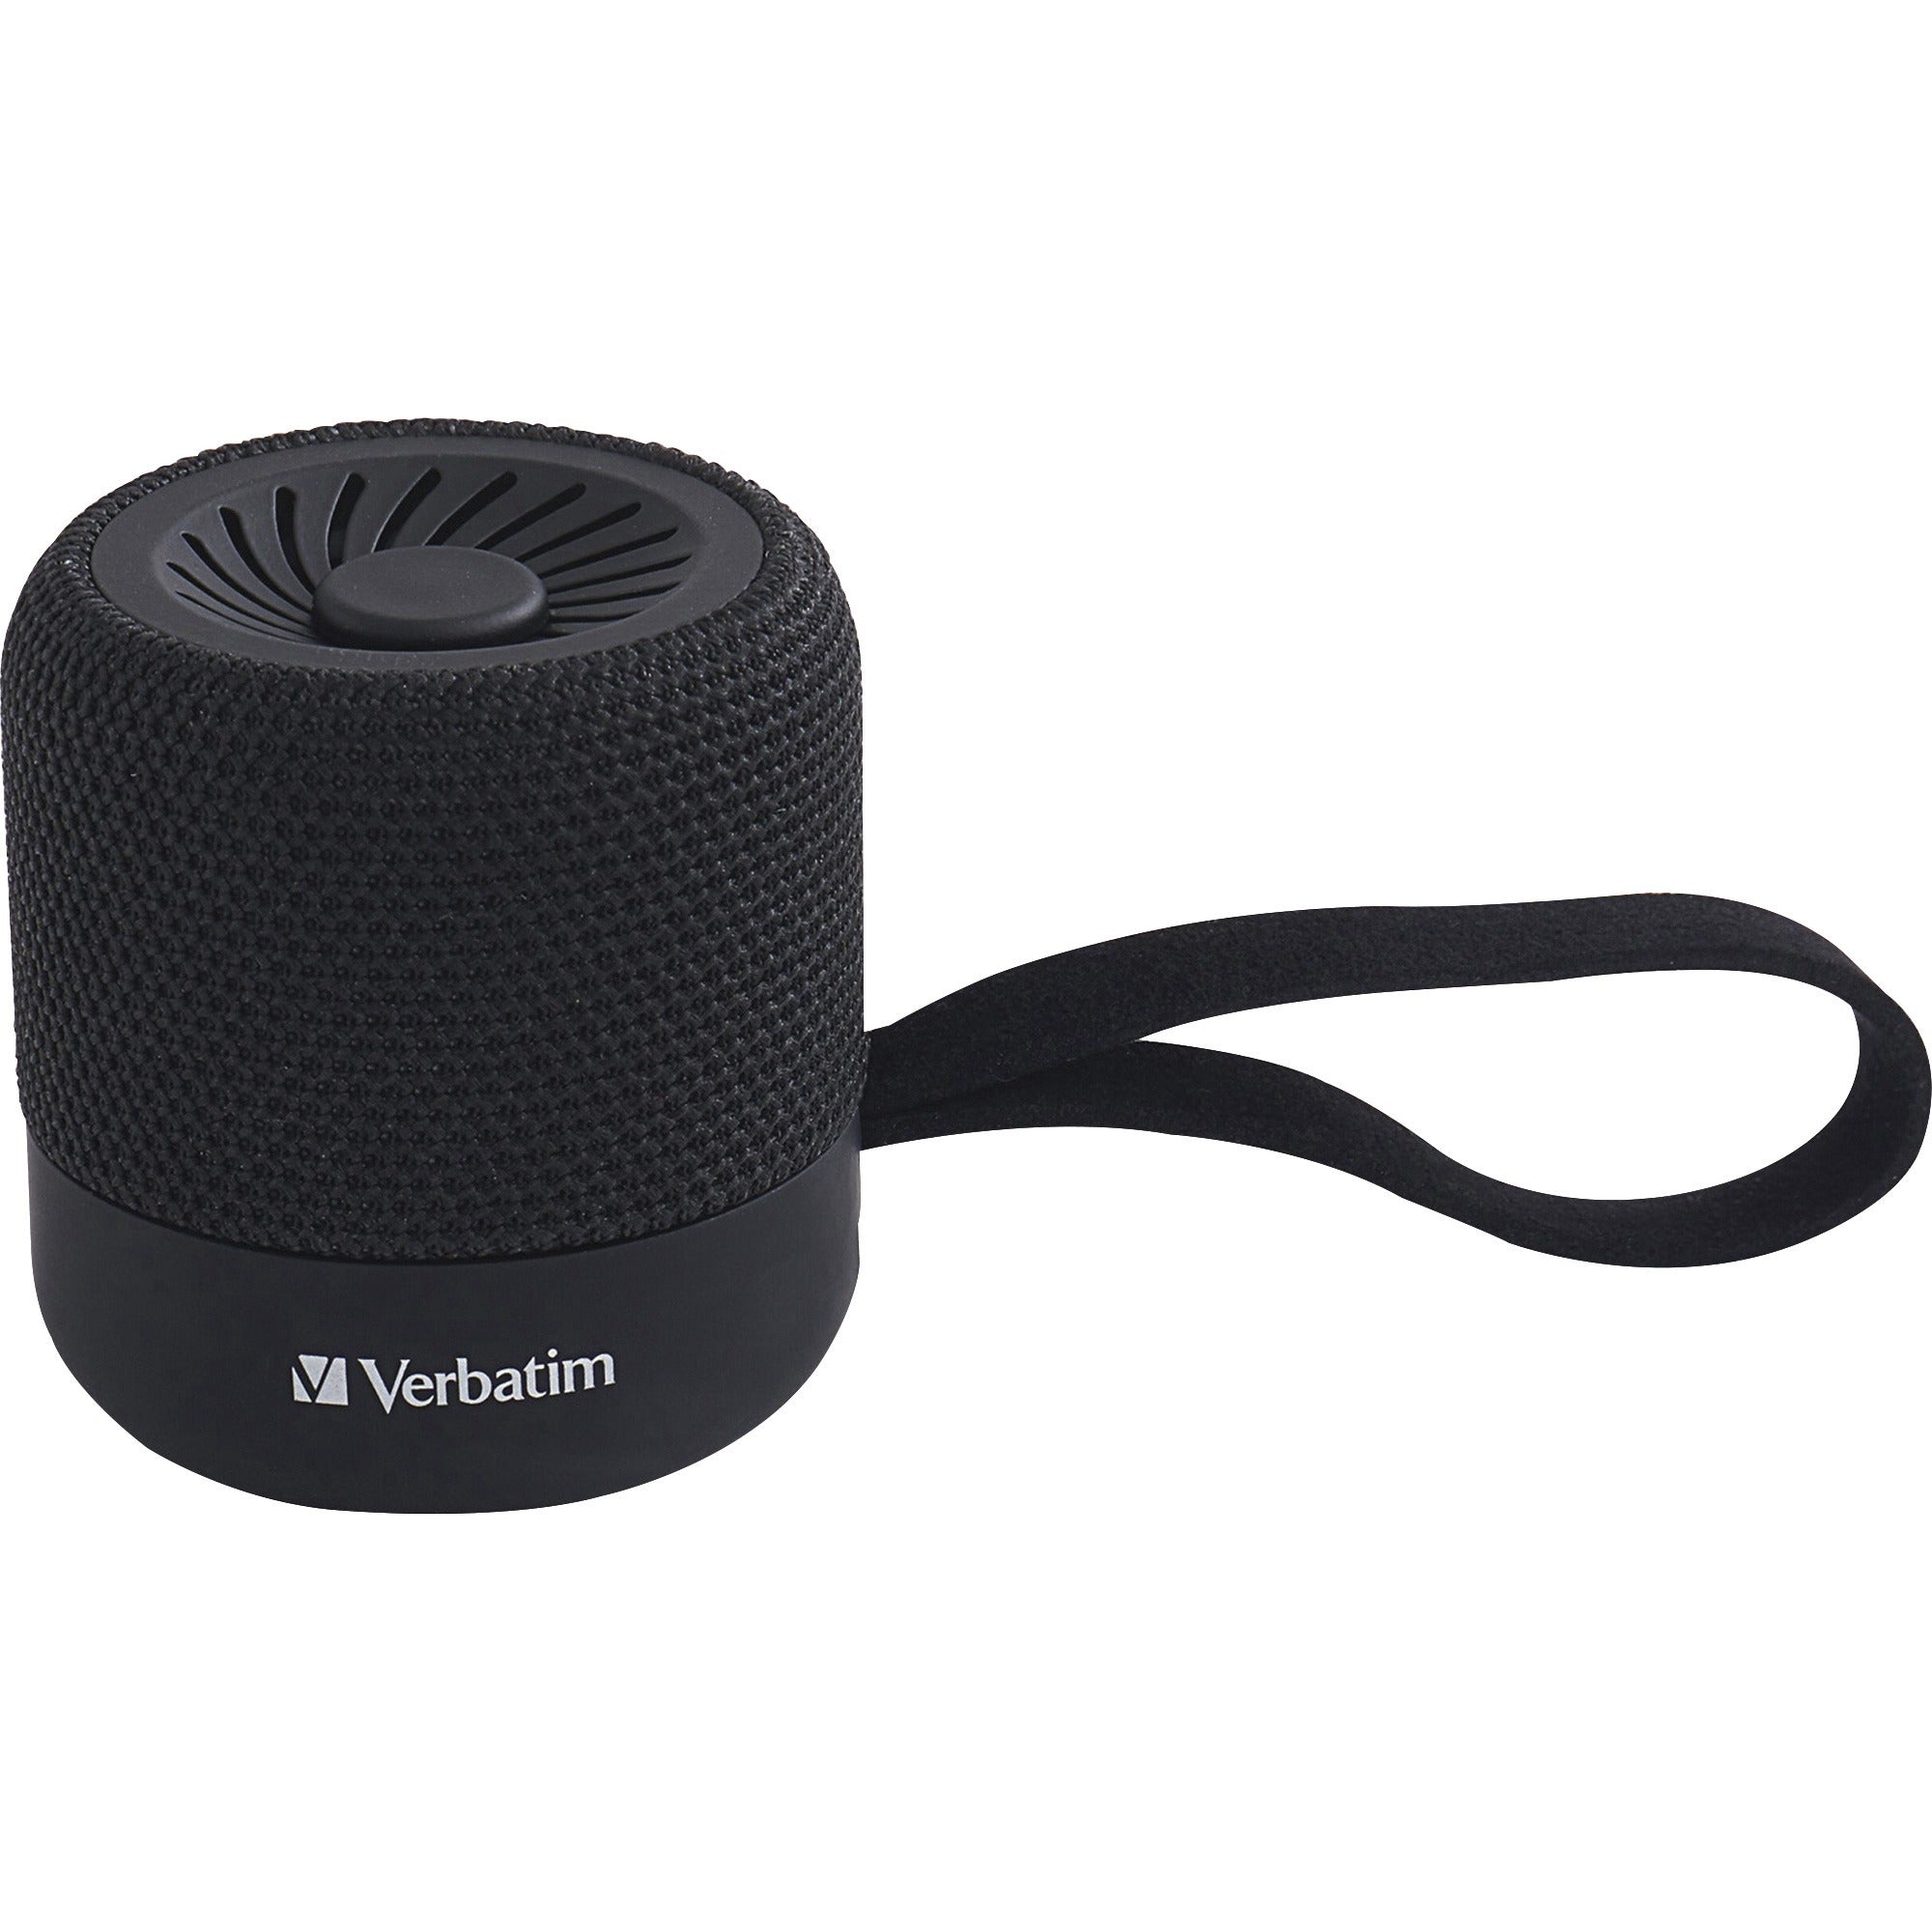 verbatim-portable-bluetooth-speaker-system-black-100-hz-to-20-khz-truewireless-stereo-battery-rechargeable-1-pack_ver70228 - 1